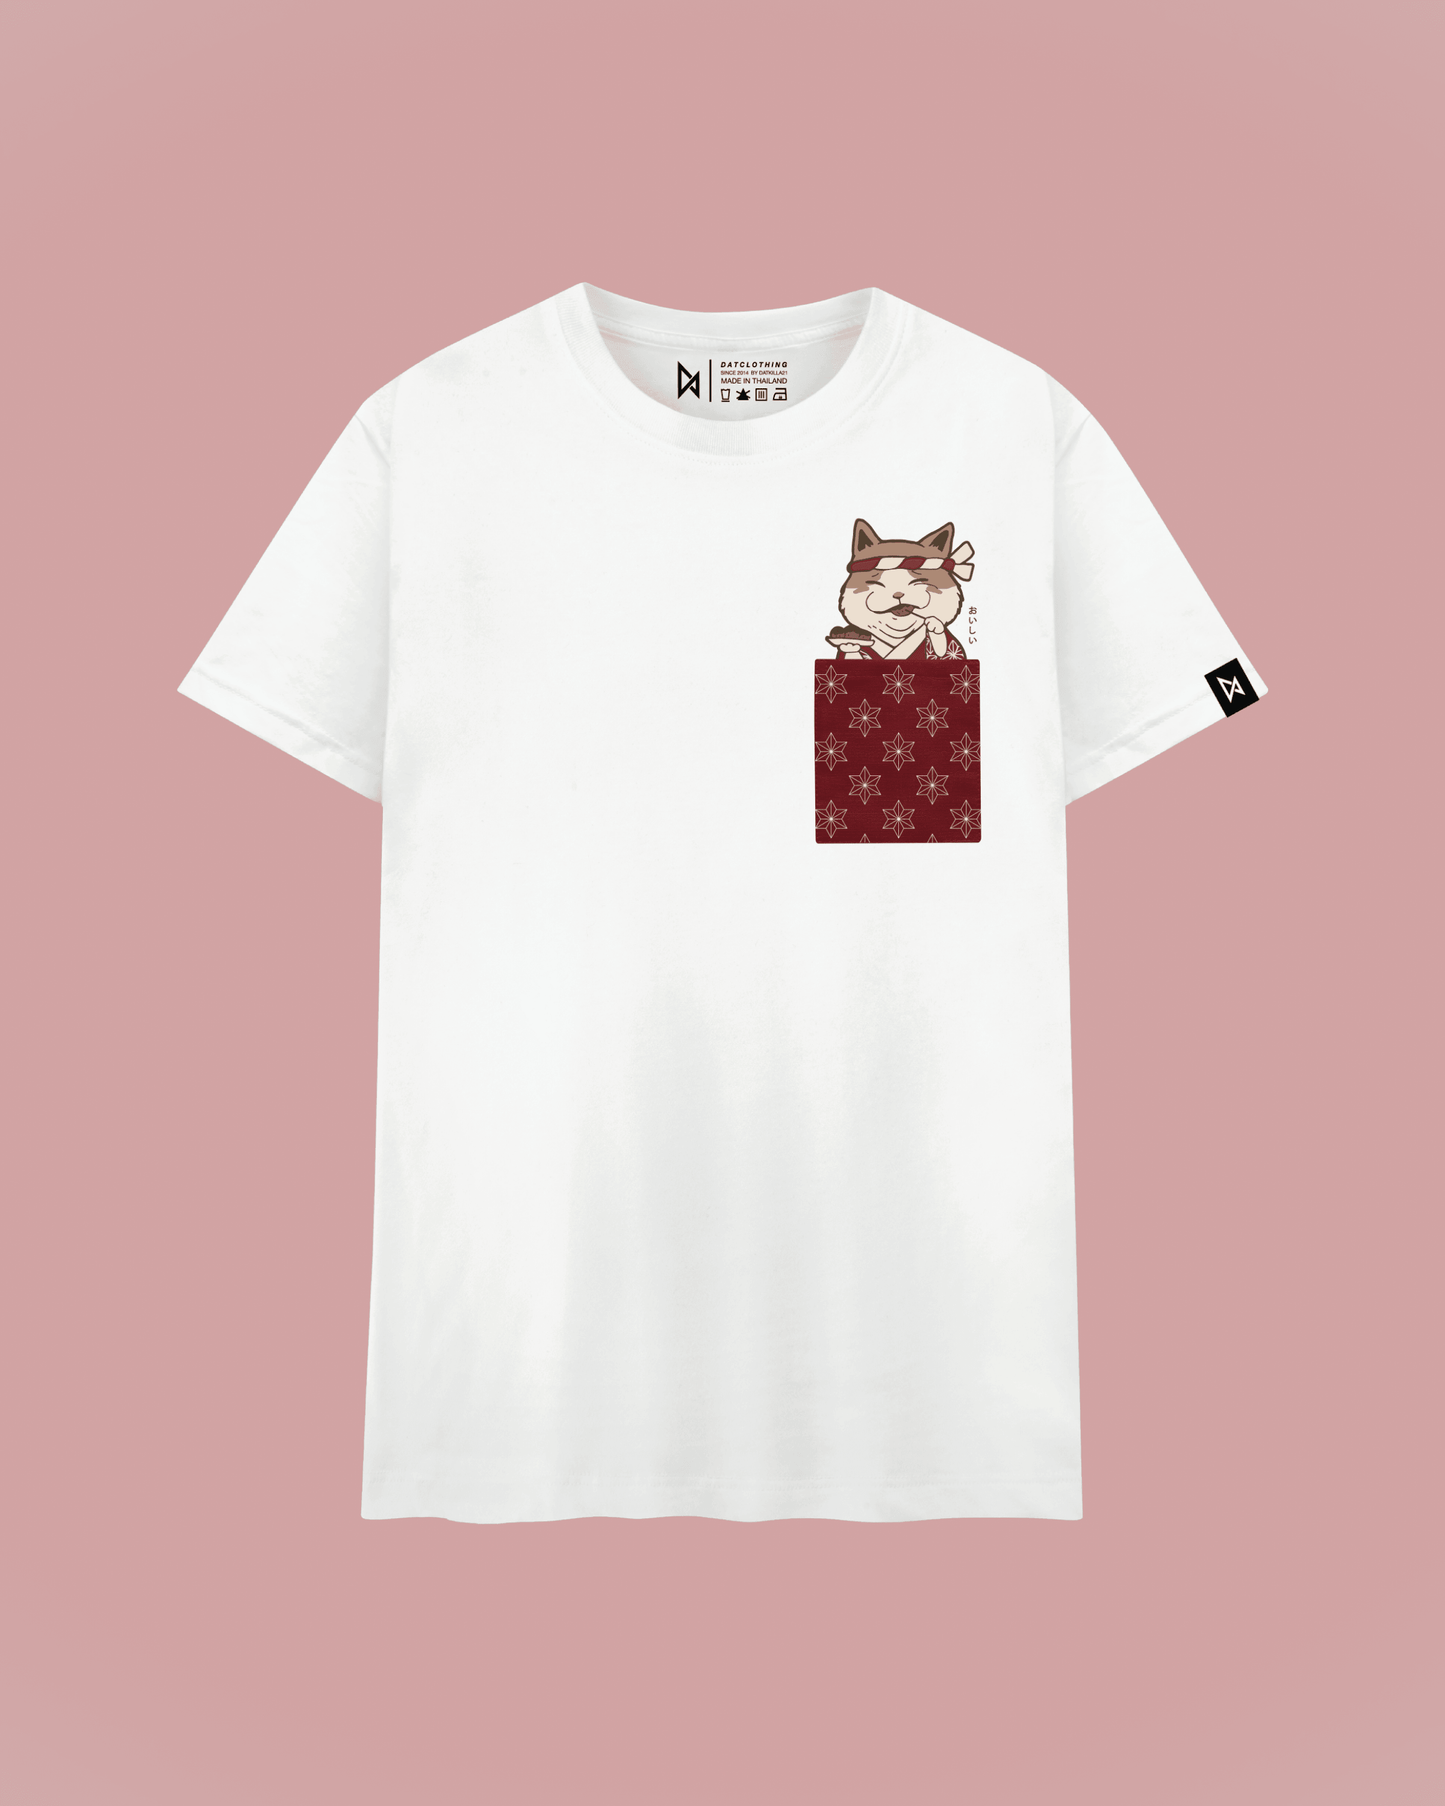 Datclothing - White T-Shirt with Takoyaki Neko (cat) print and pocket